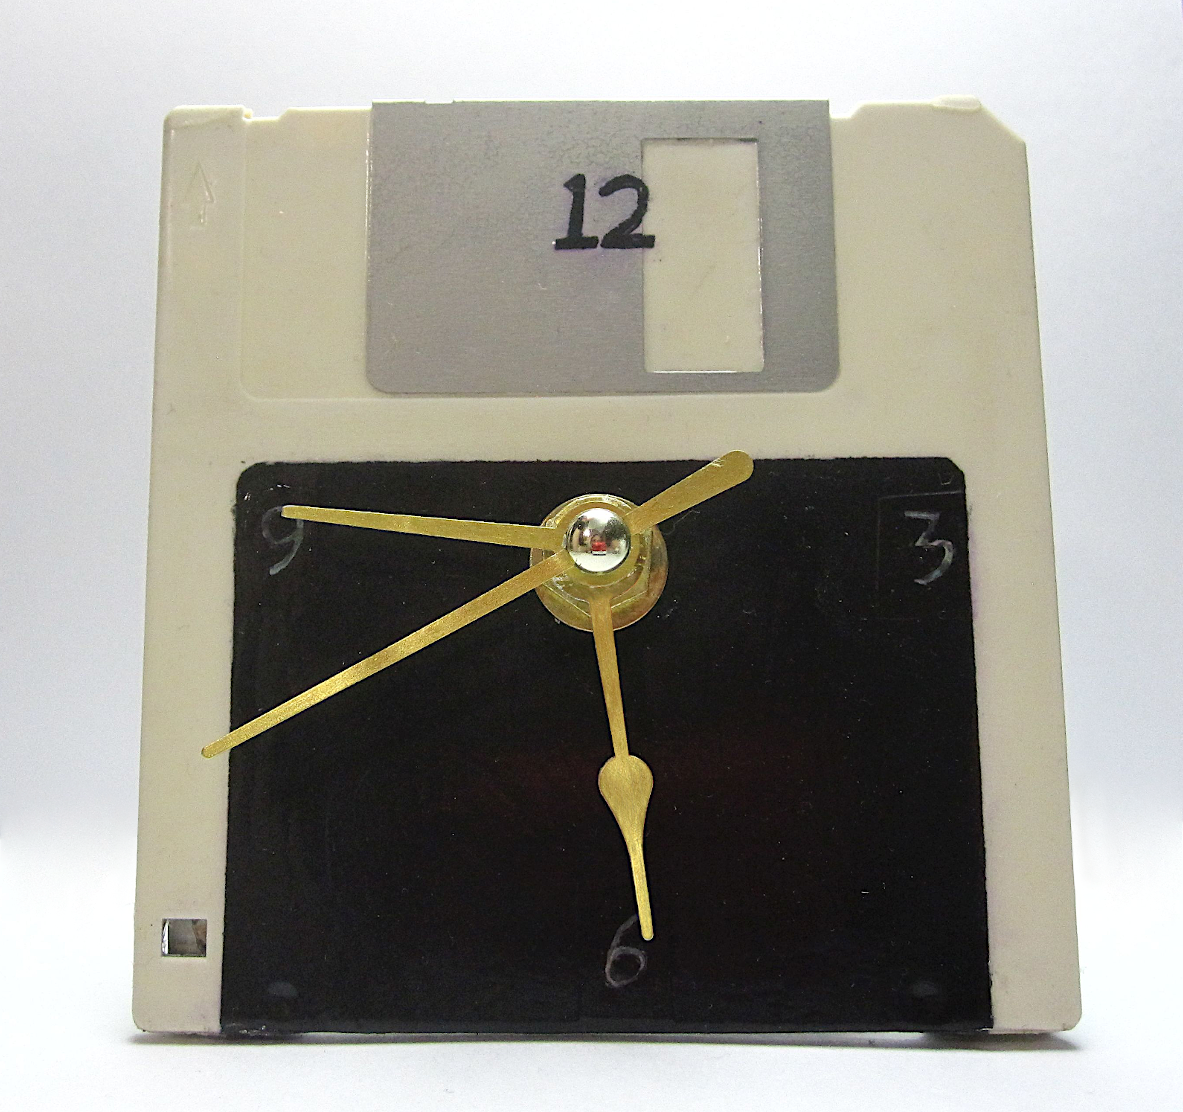 Primary image for Black and White Floppy Disk Desk Clock